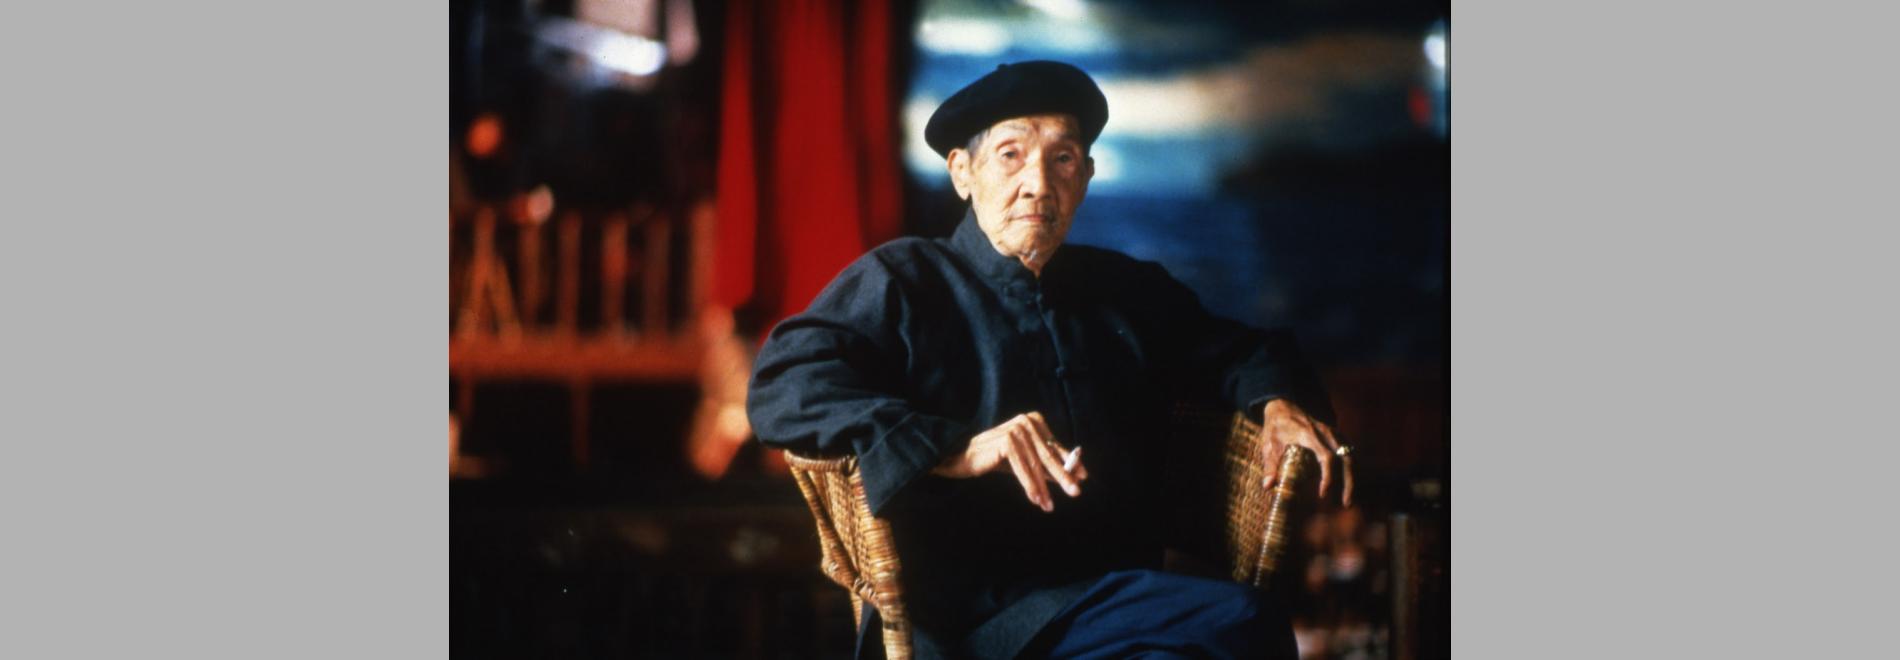 Xi meng ren sheng / El mestre titellaire (Hou Hsiao-hsien, 1993)